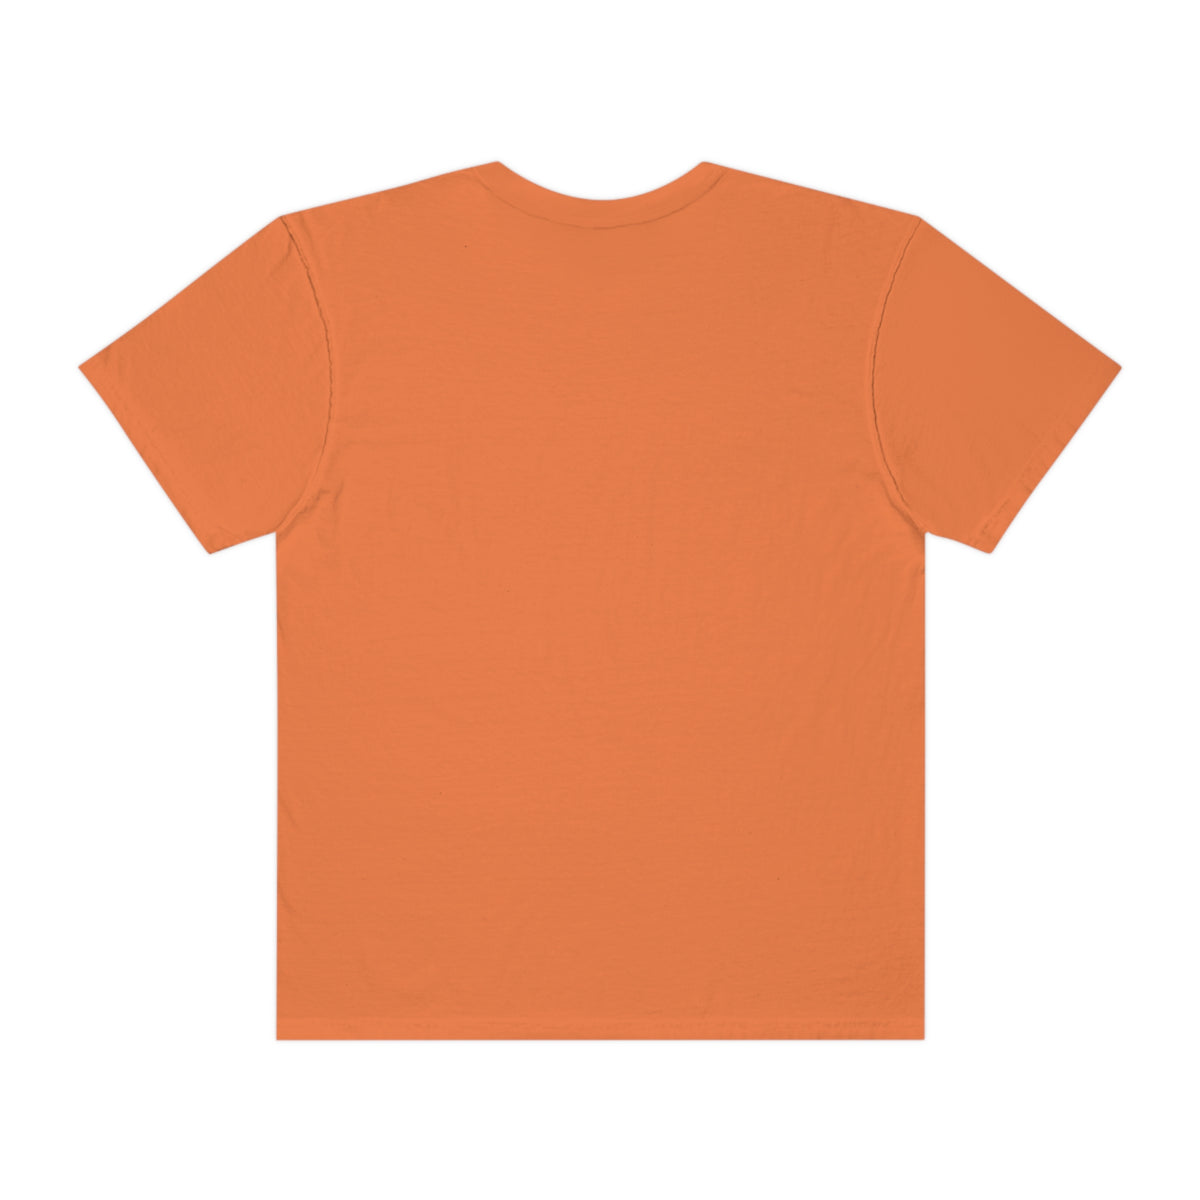 Skoden T-Shirt - Comfort Colors